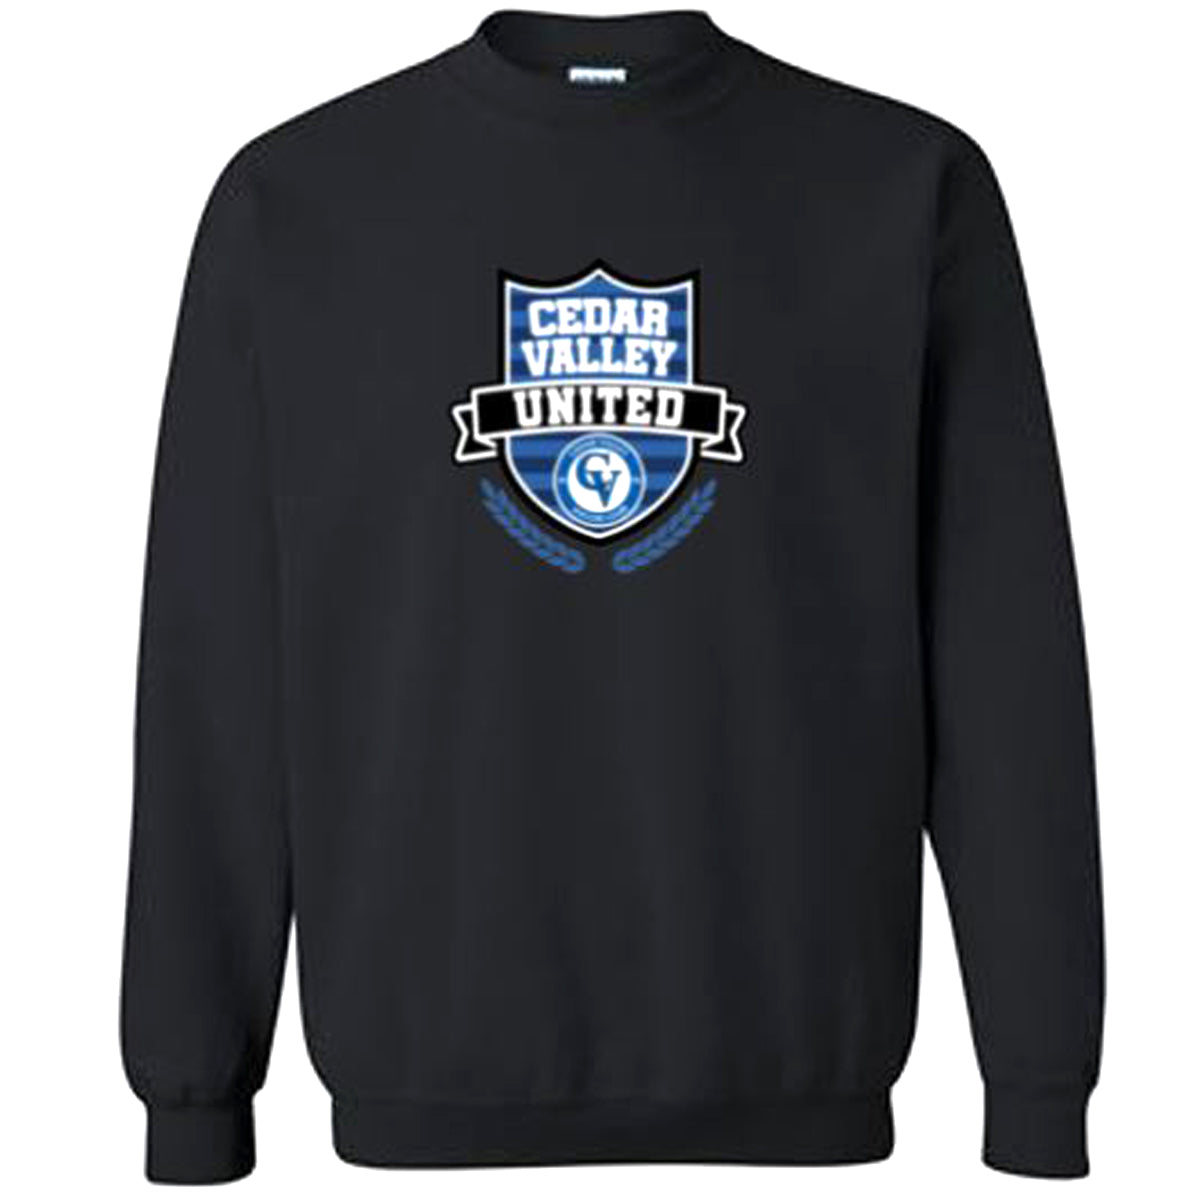 Cedar Valley Soccer Club Heavy Blend Crewneck Sweatshirt Sweatshirt Gildan Men's Small Black 